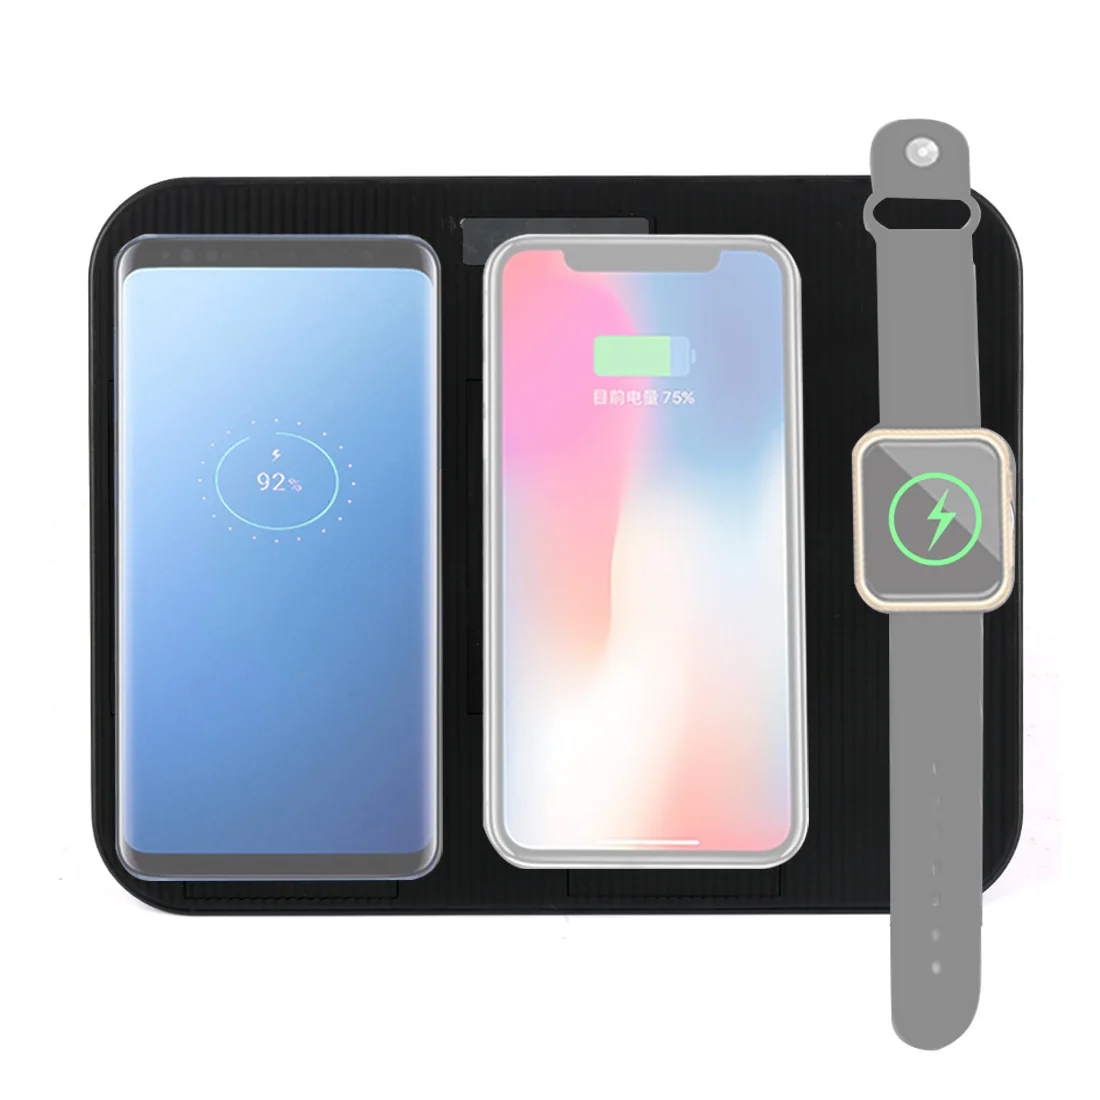 3In1 QI быстро беспроводной зарядное устройство Стенд складной для iphone 8 Plus X XR XS MAX зарядного устройства док станции для Apple Watch AirPods